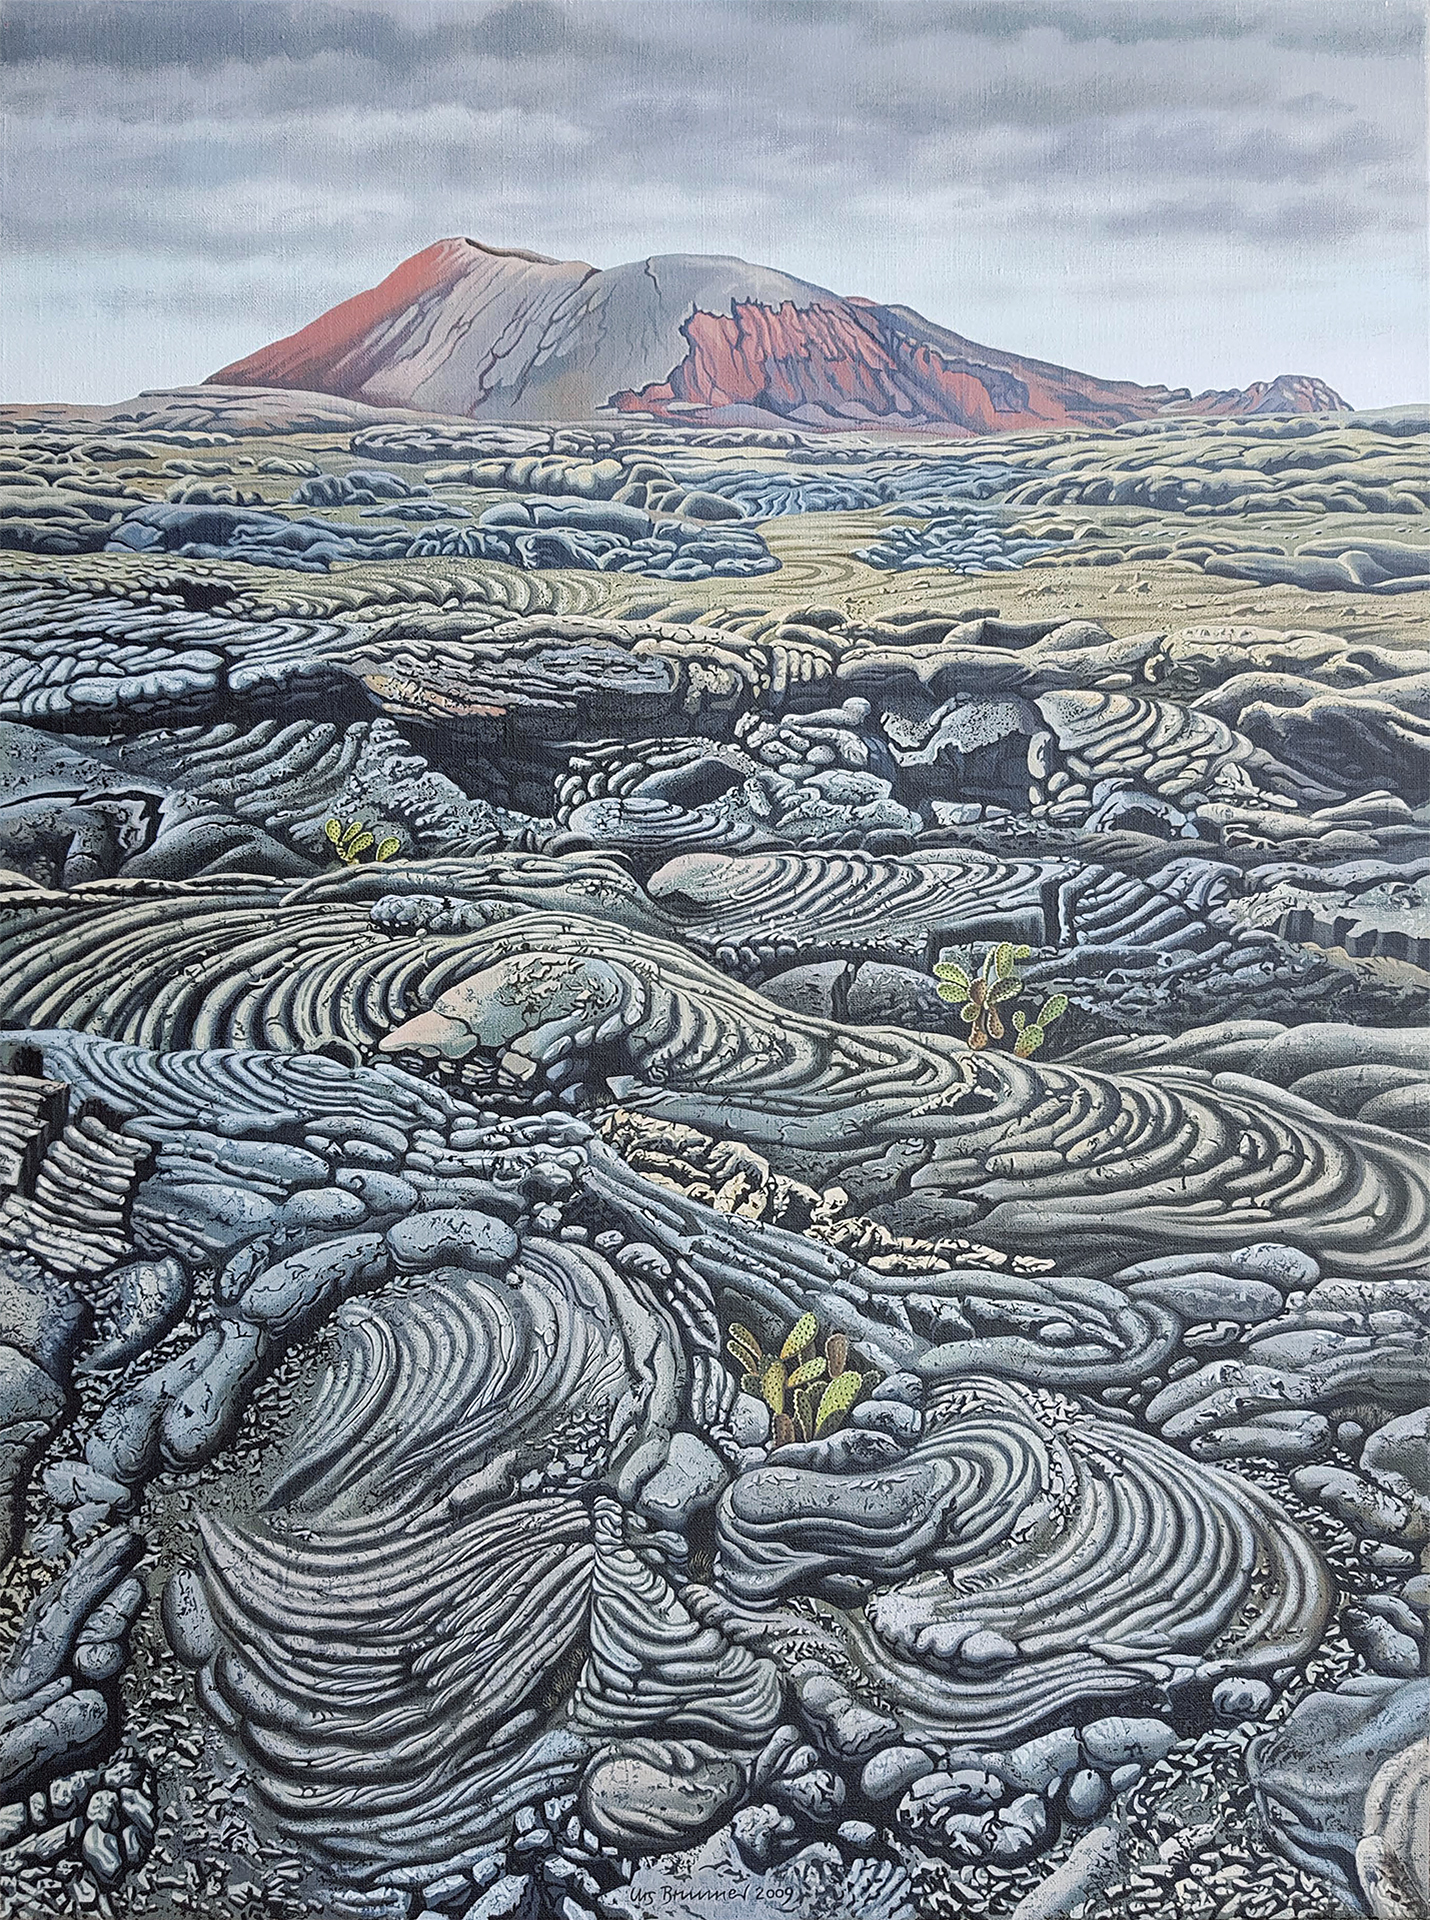 Mar de Lava ll / Lanzarote, 2009, Acryl auf Leinwand, 80 x 60 cm